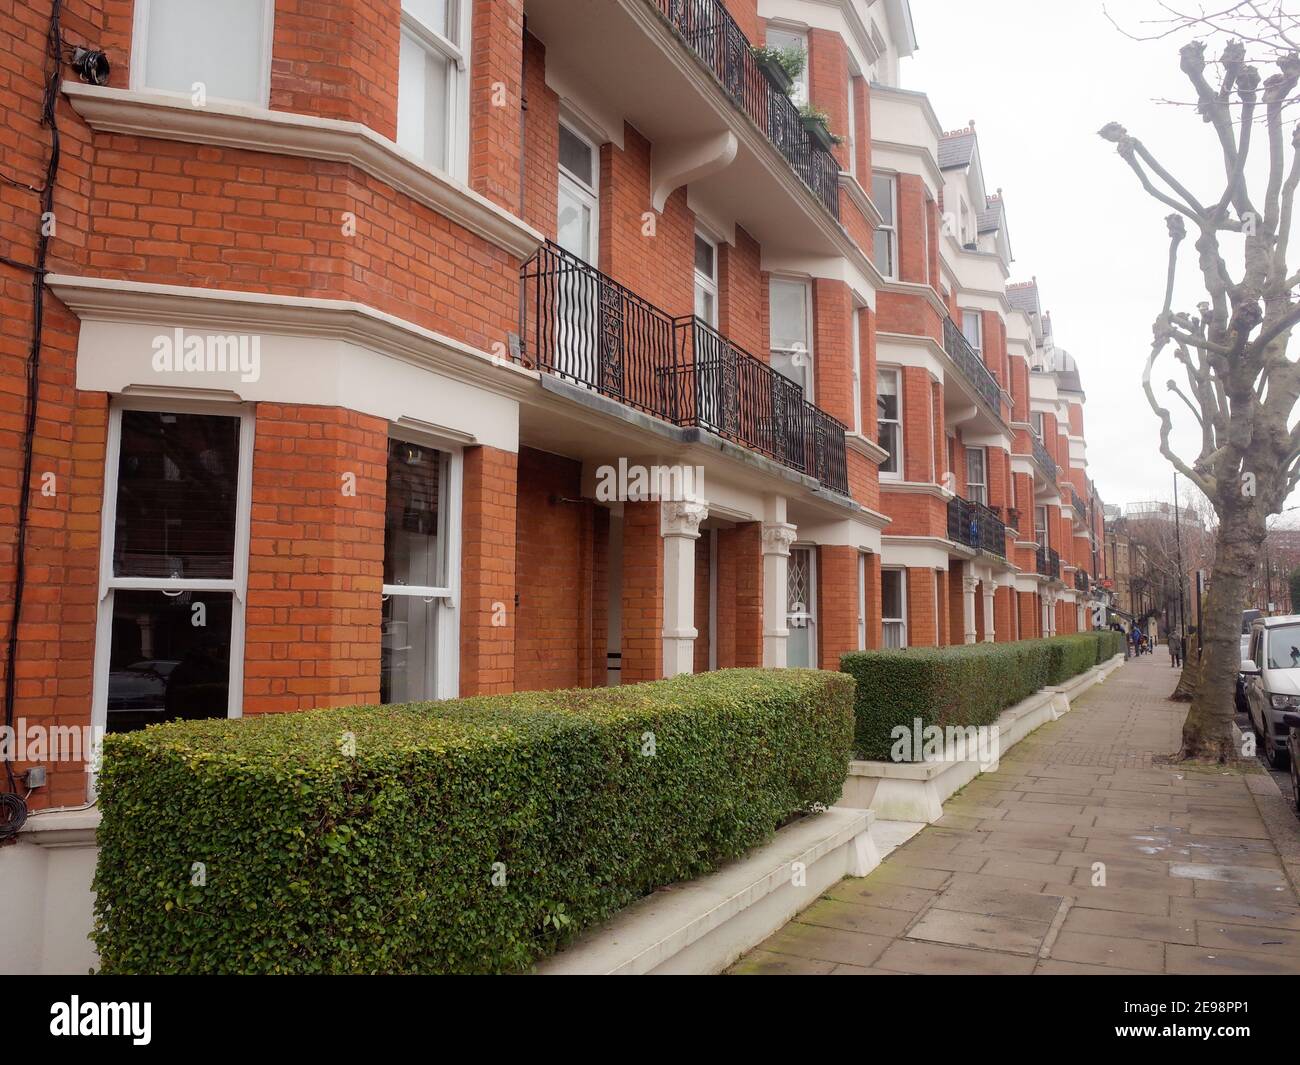 London- Street of upmarket red brick townhouses in Maida Vale area of Paddington, North West London Stock Photo